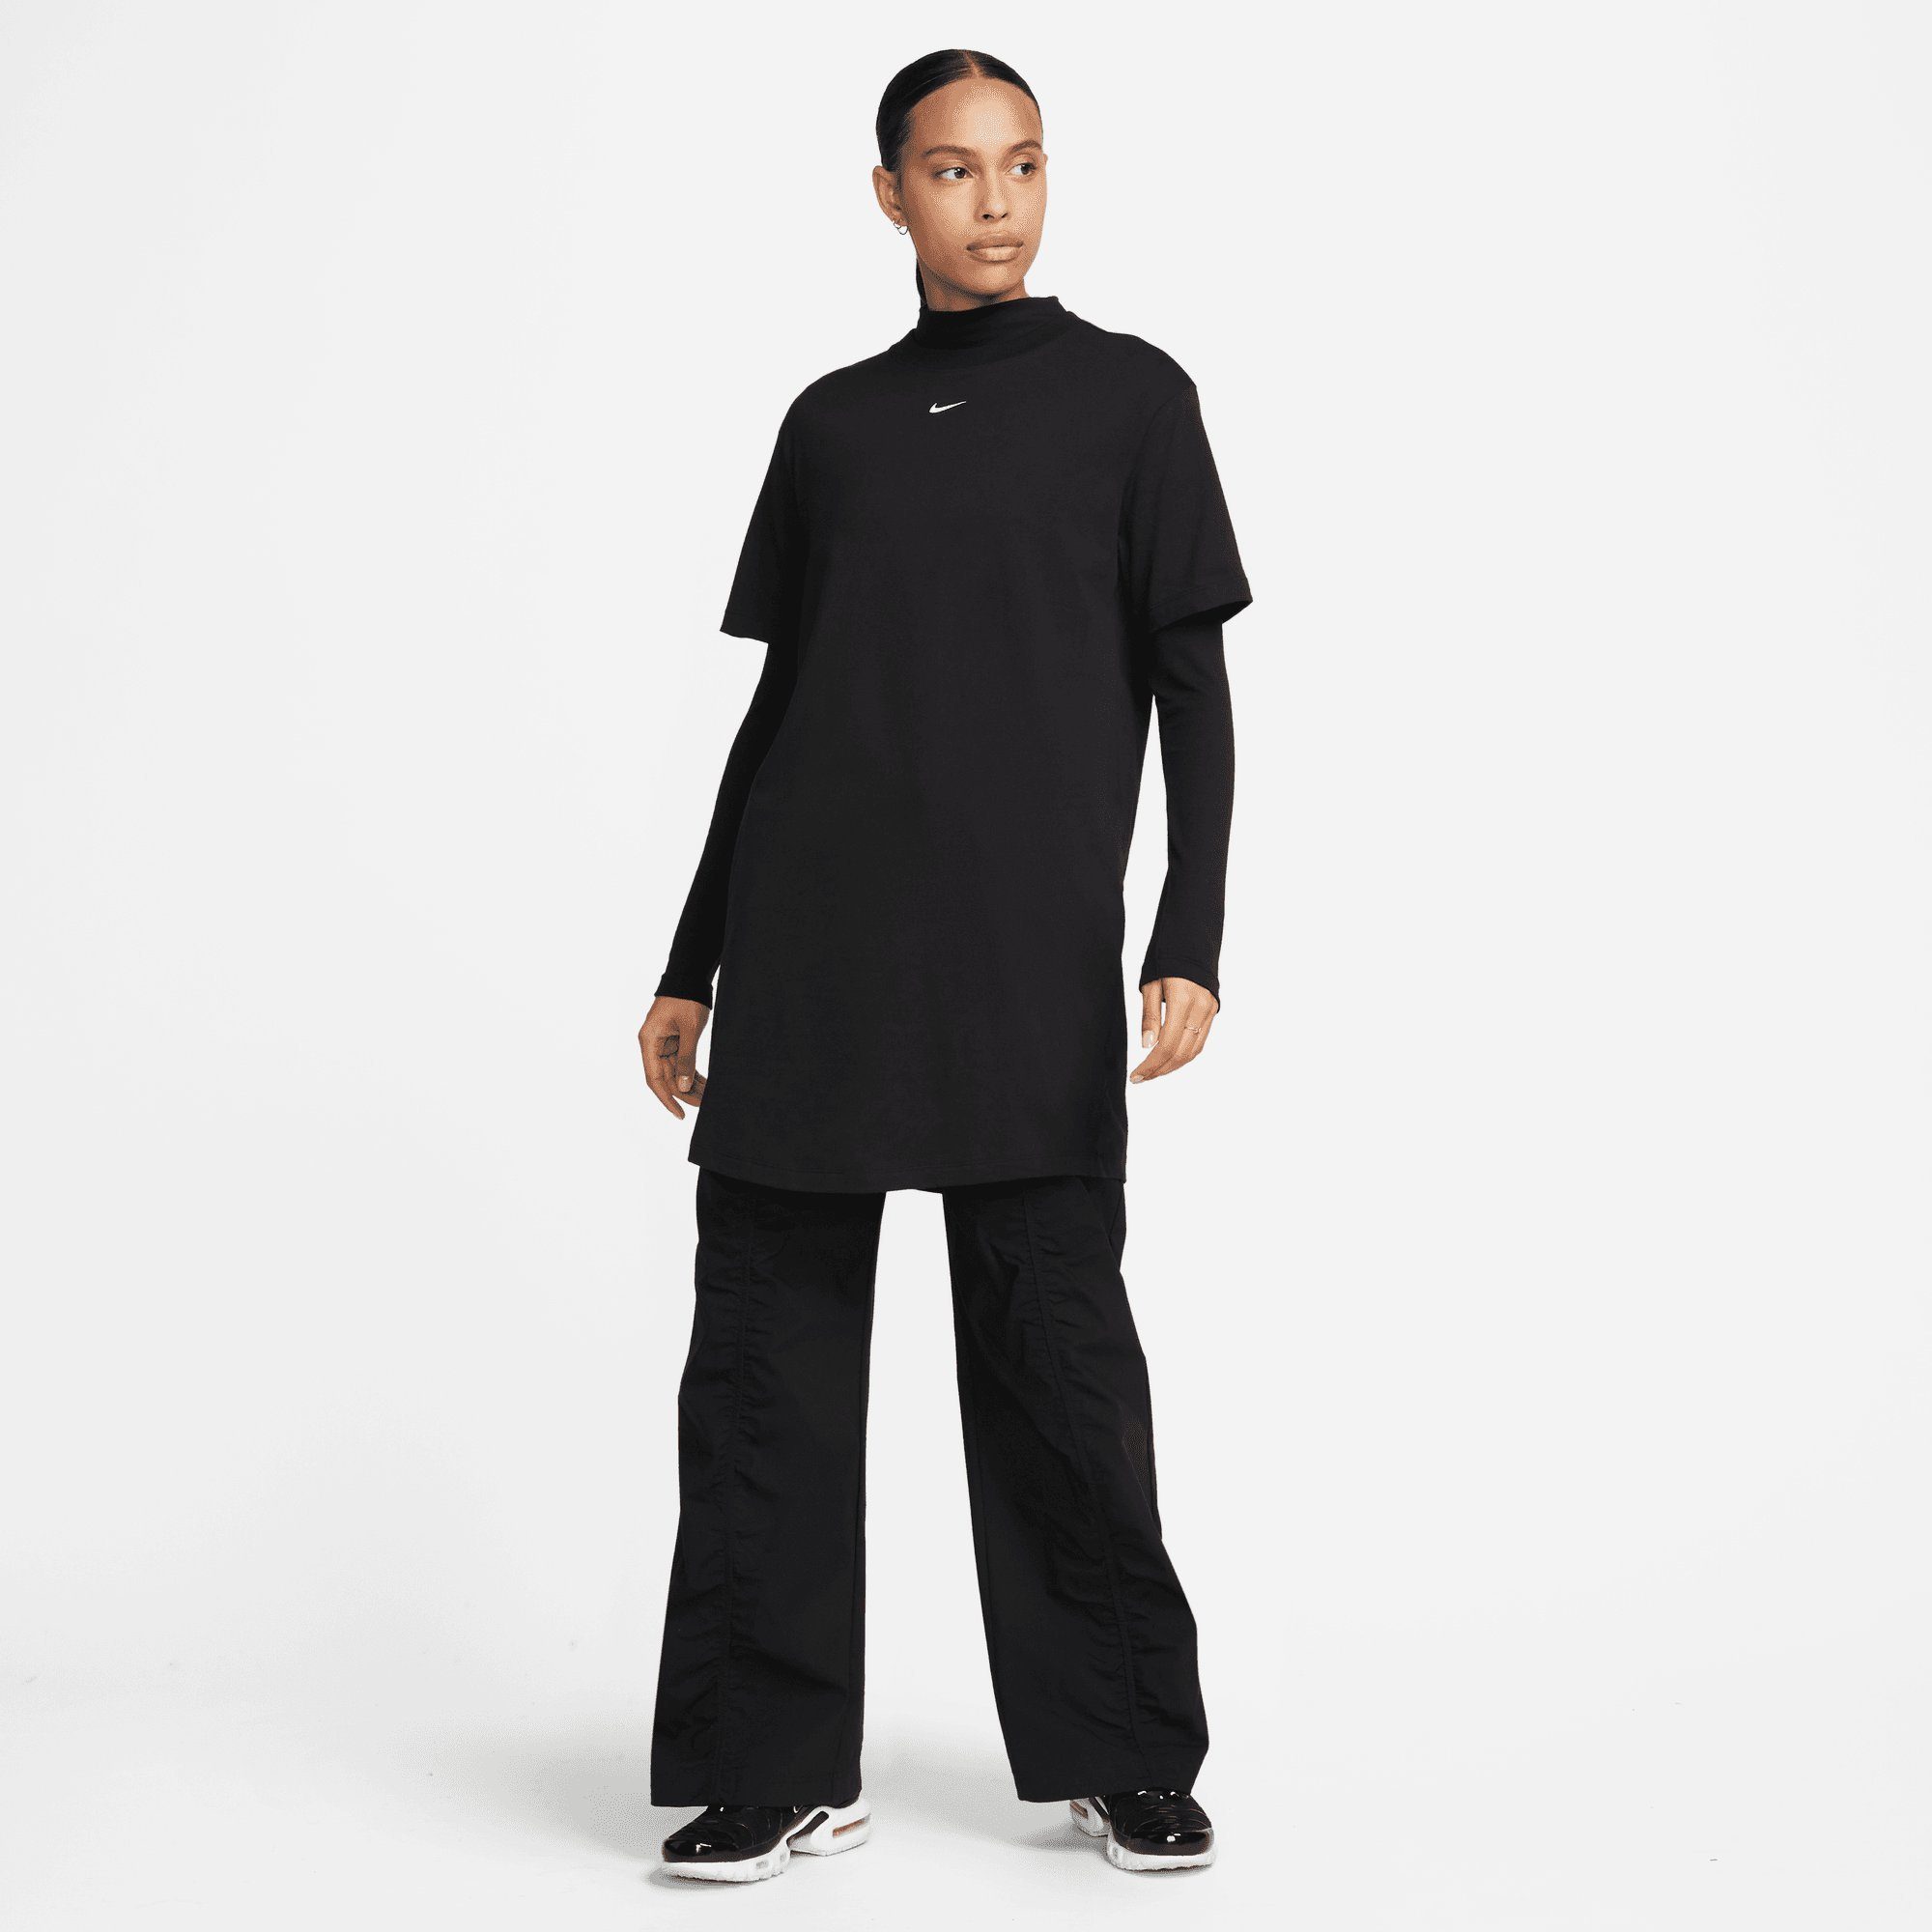 DRESS SHORT-SLEEVE BLACK/WHITE WOMEN'S Sportswear Nike Sommerkleid ESSENTIAL